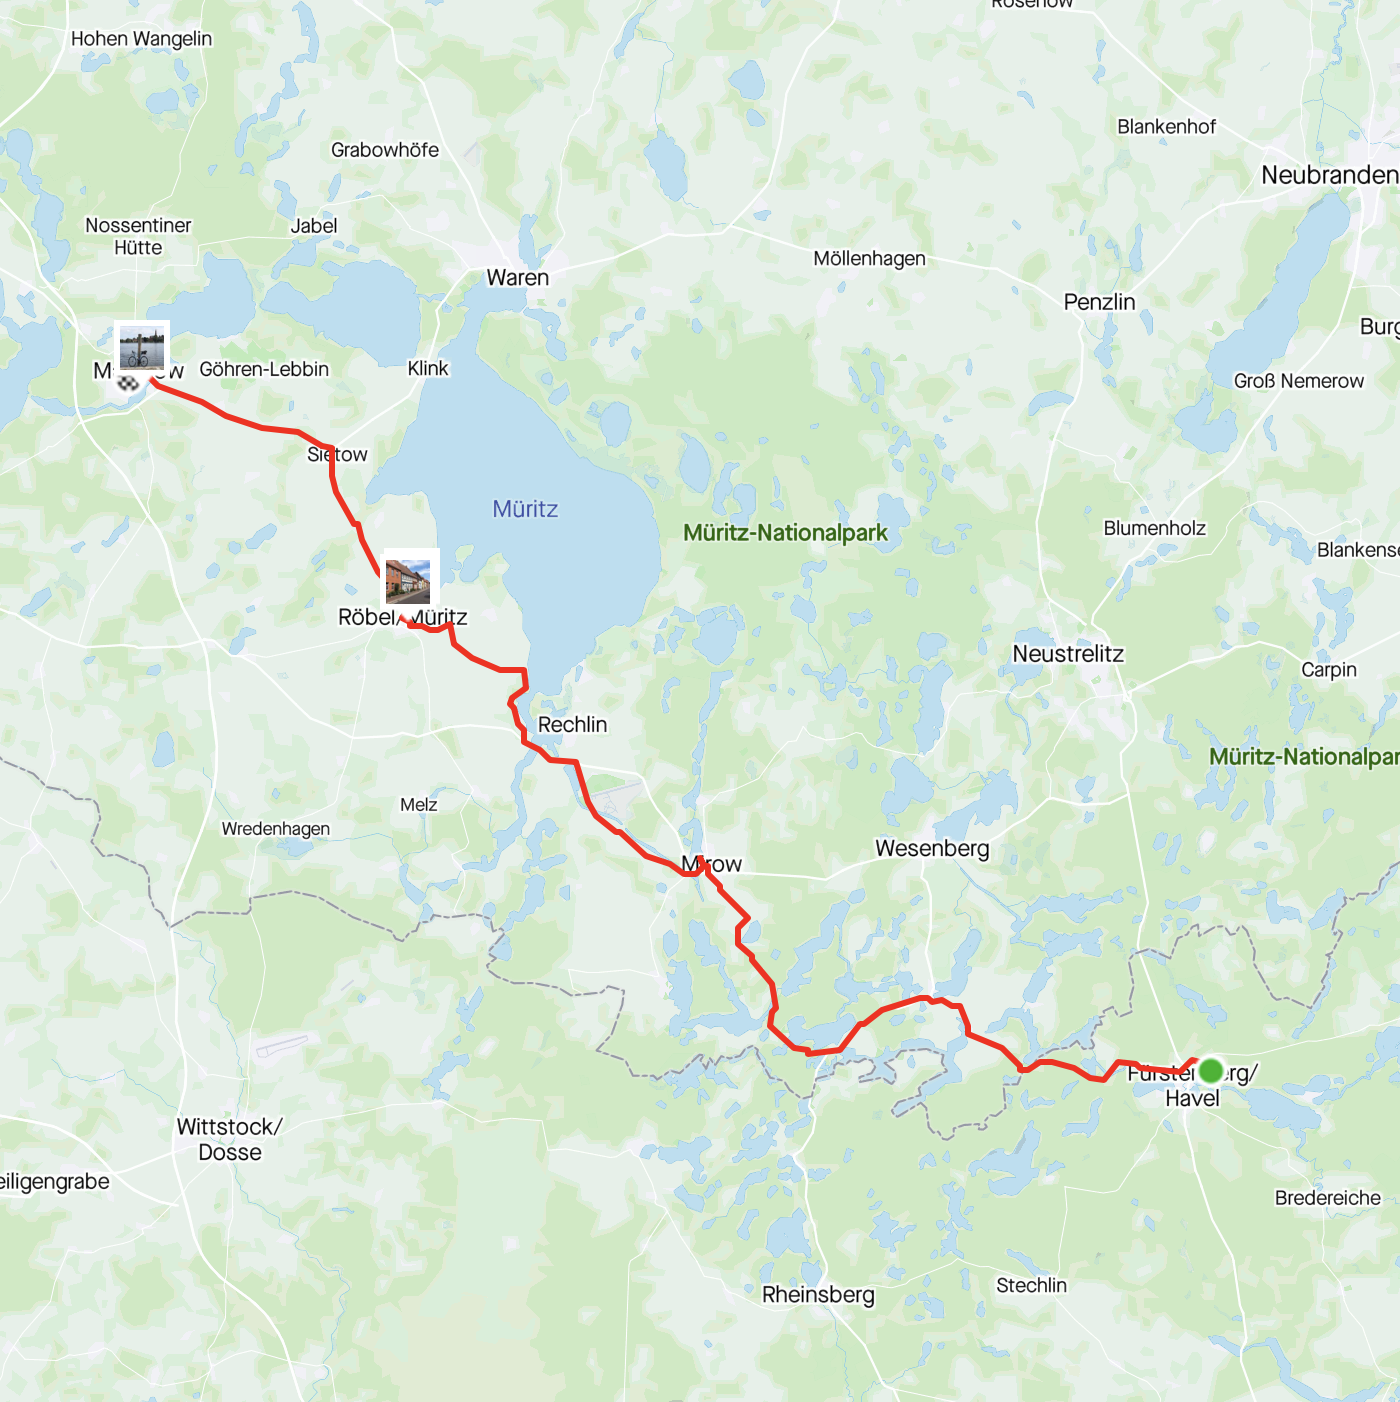 Day 2: 78 kilometers